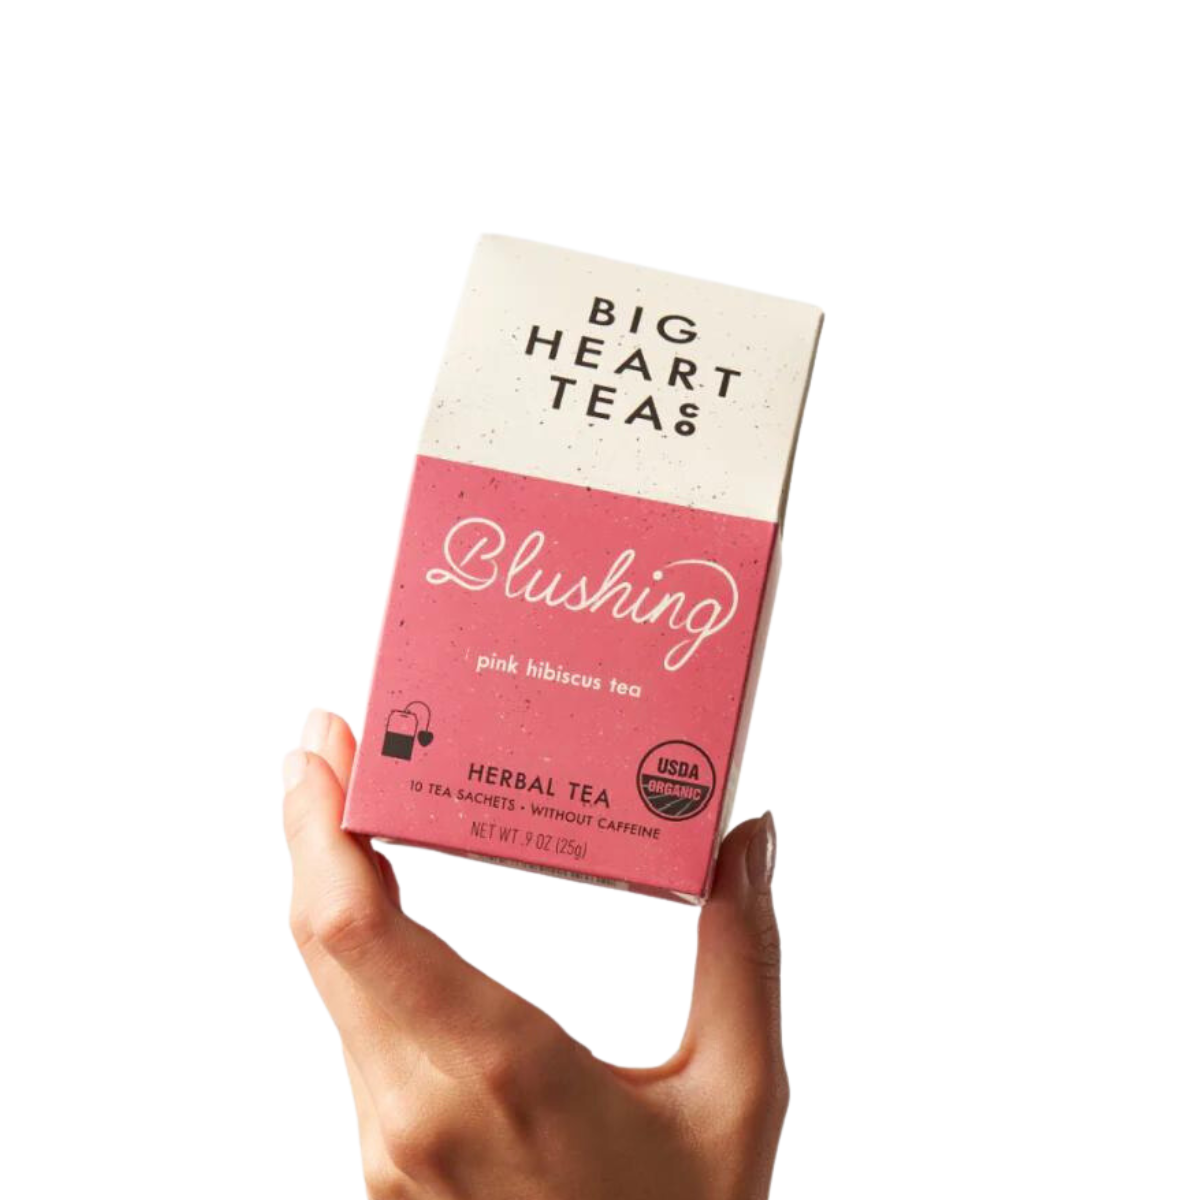 Big Heart Tea Co.- Blushing